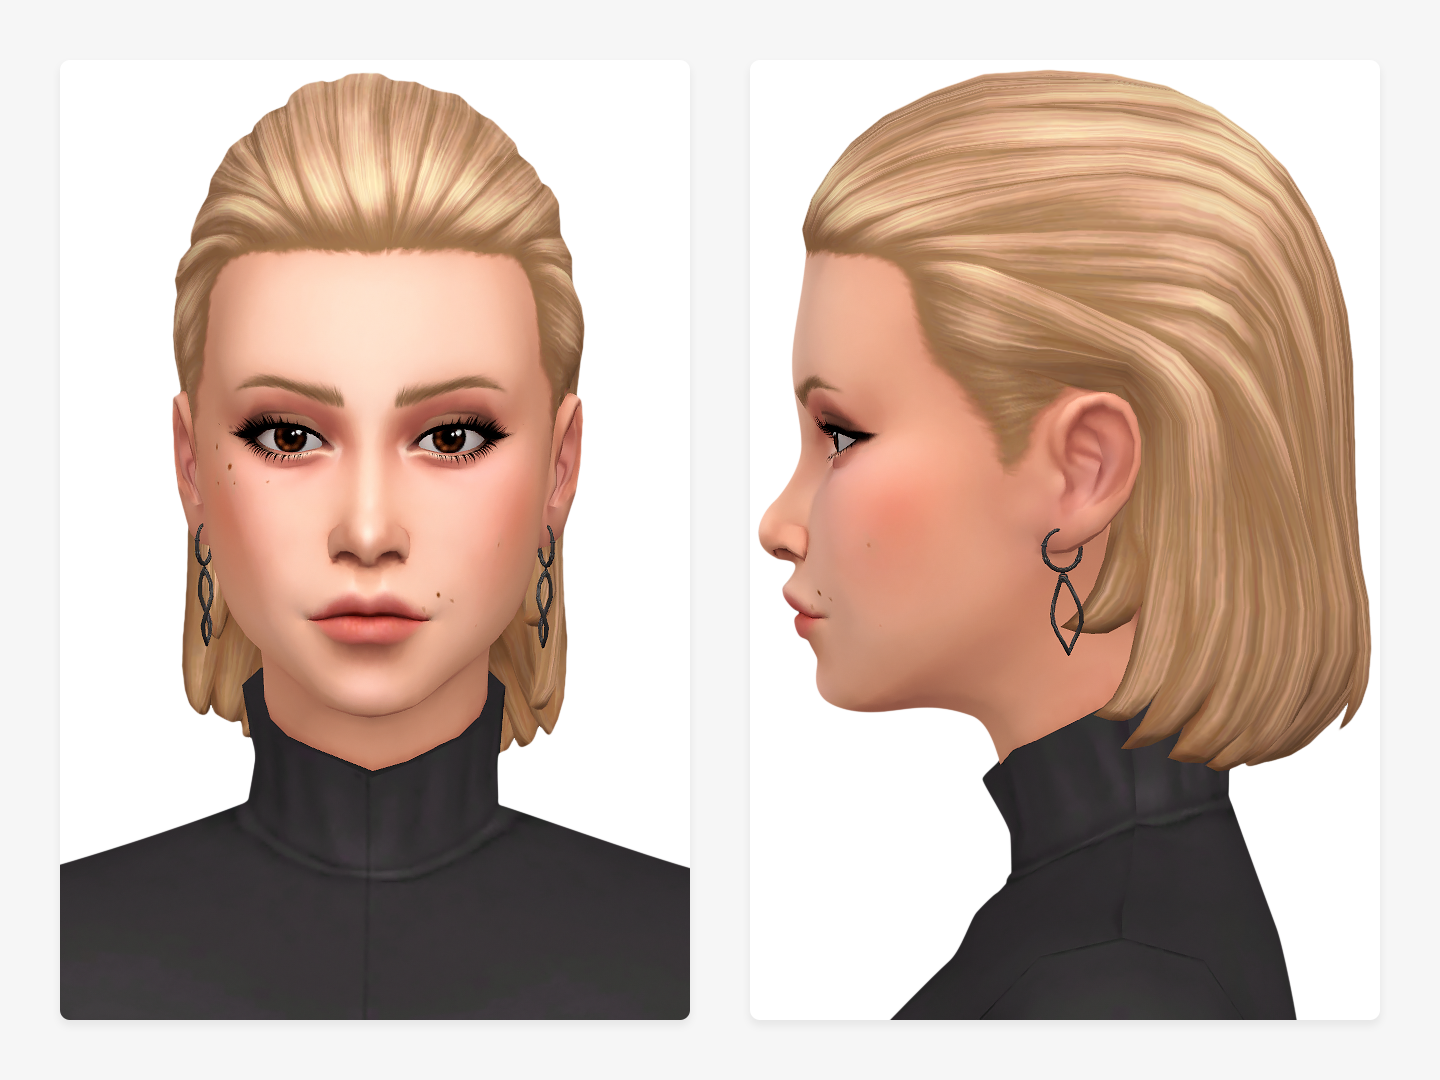 Sims 4 cc hair glitch - psadobit